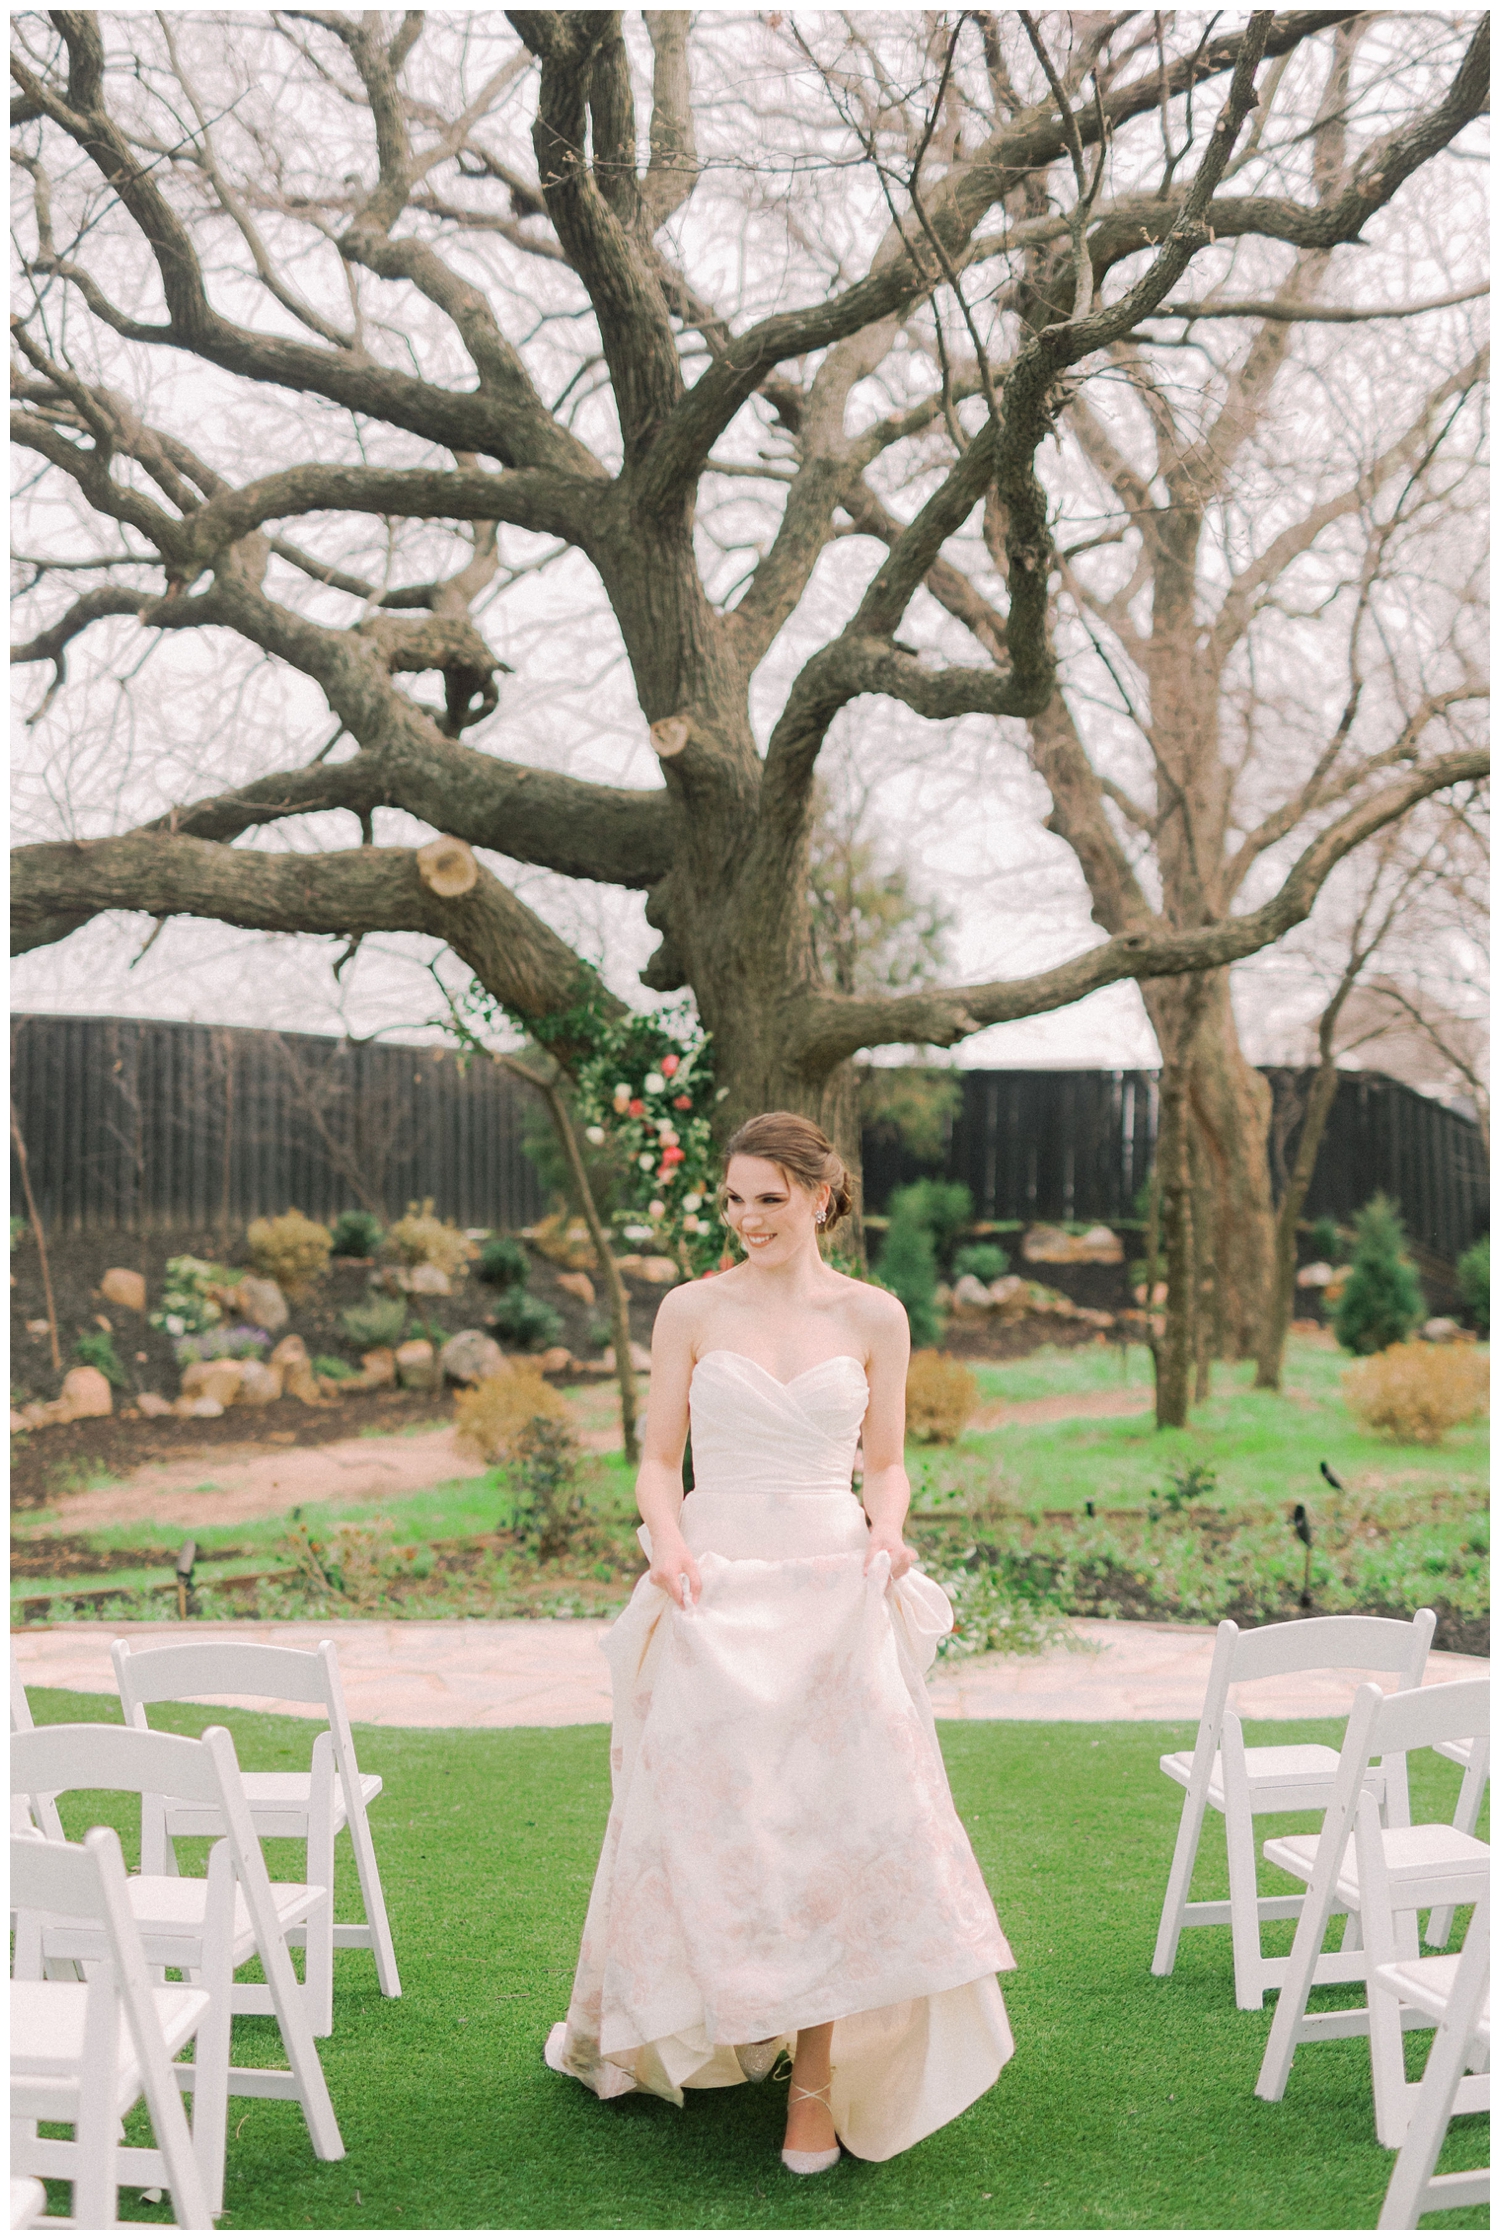 bride skipping through ceremony space outdoors at Brighton Abbey wedding venue